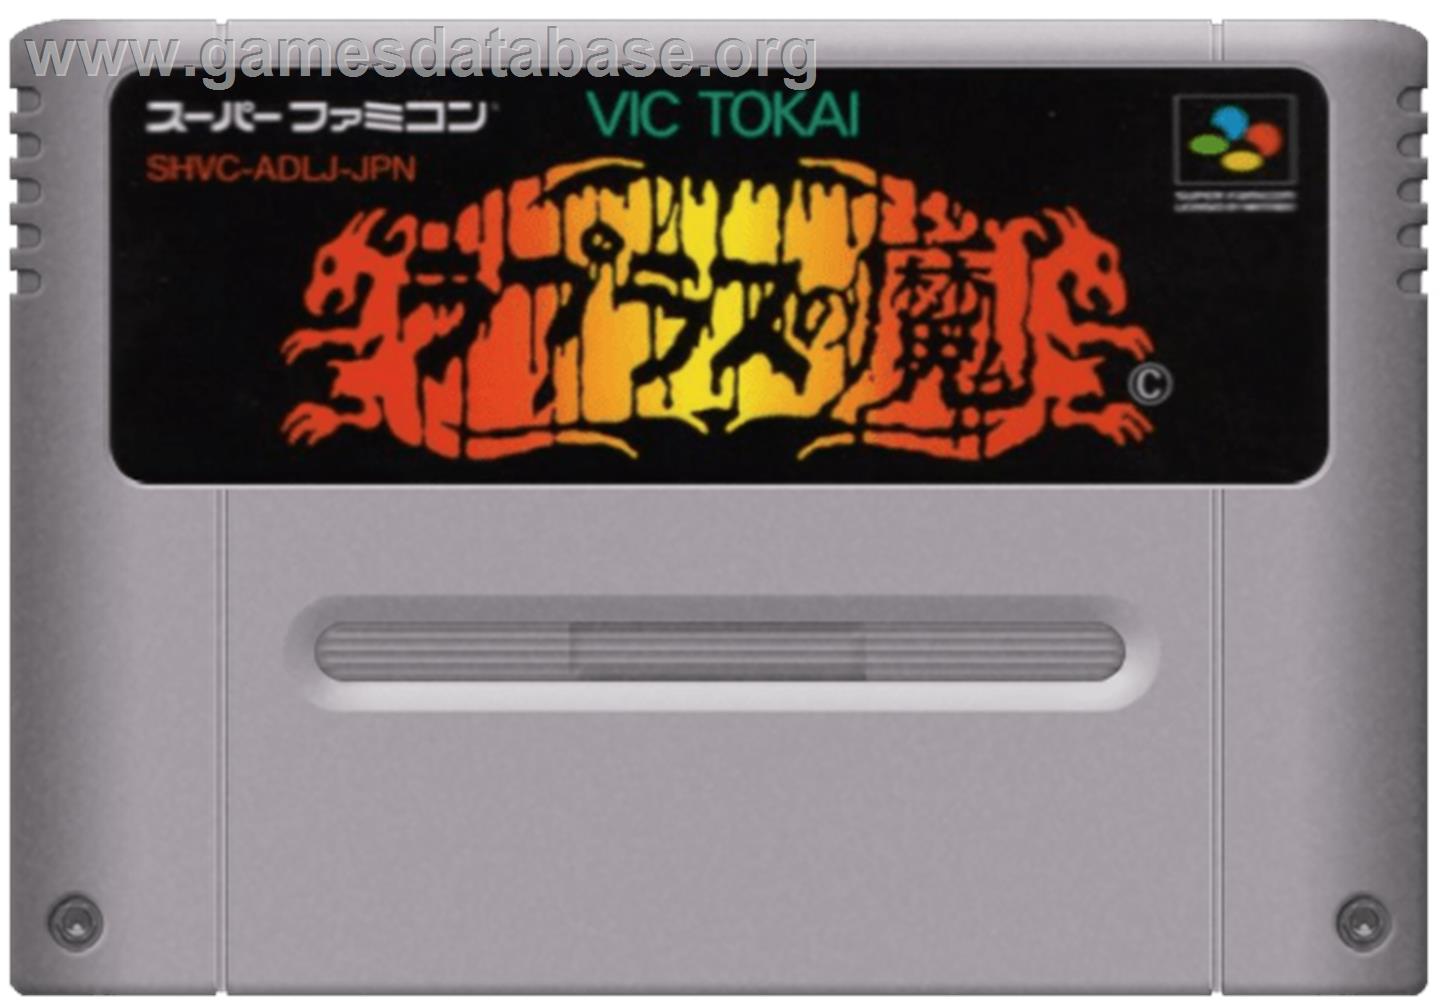 Laplace no Ma - Nintendo SNES - Artwork - Cartridge